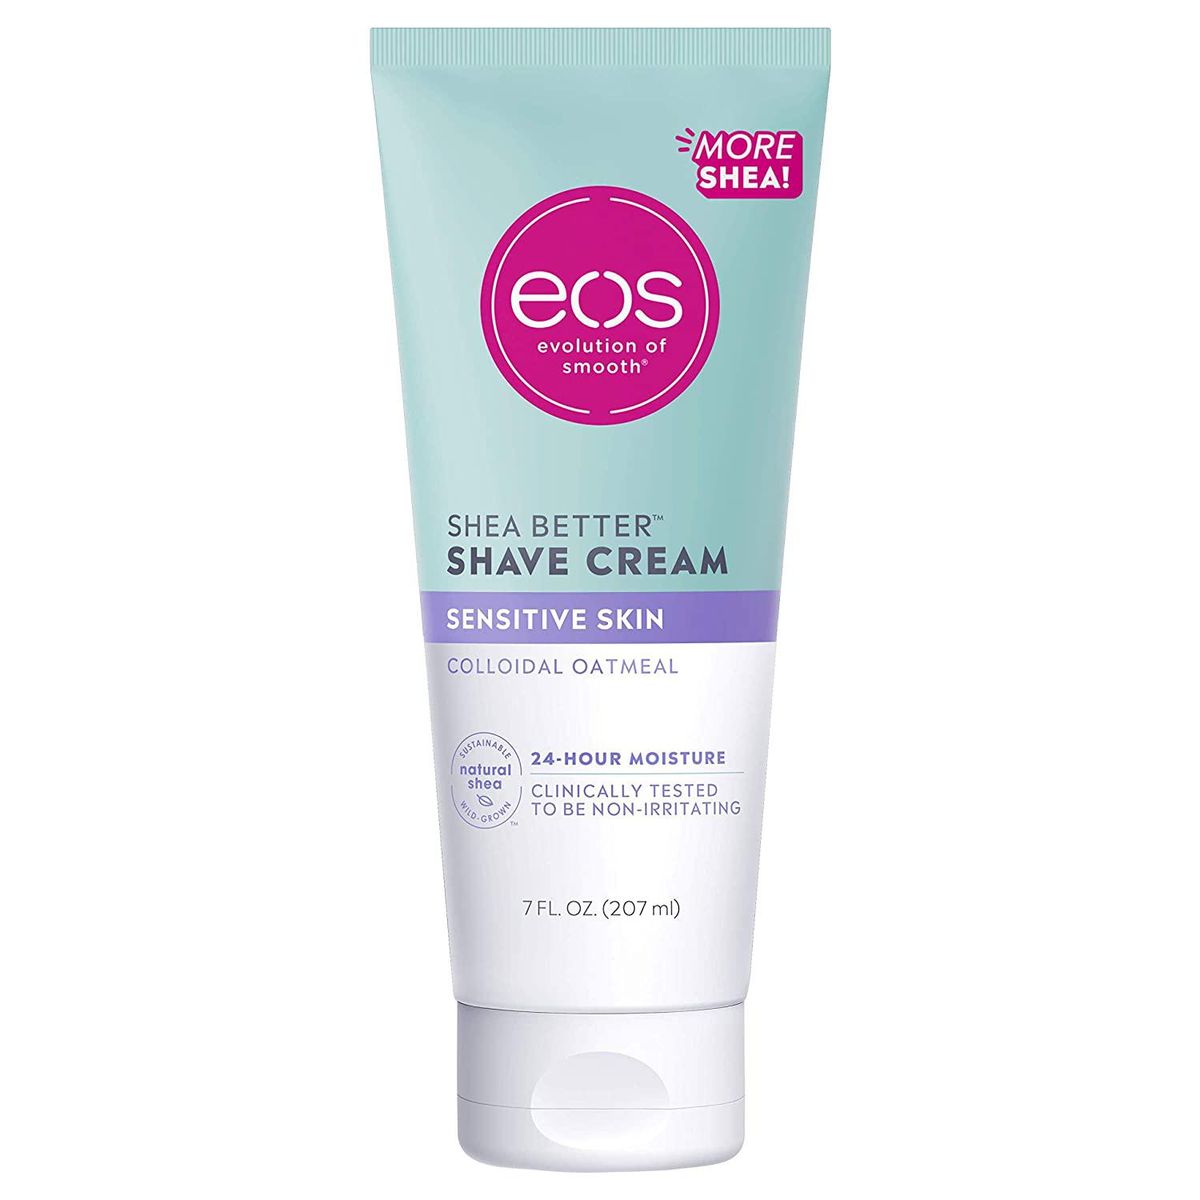 Shea Better Sensitive Skin Shave Cream